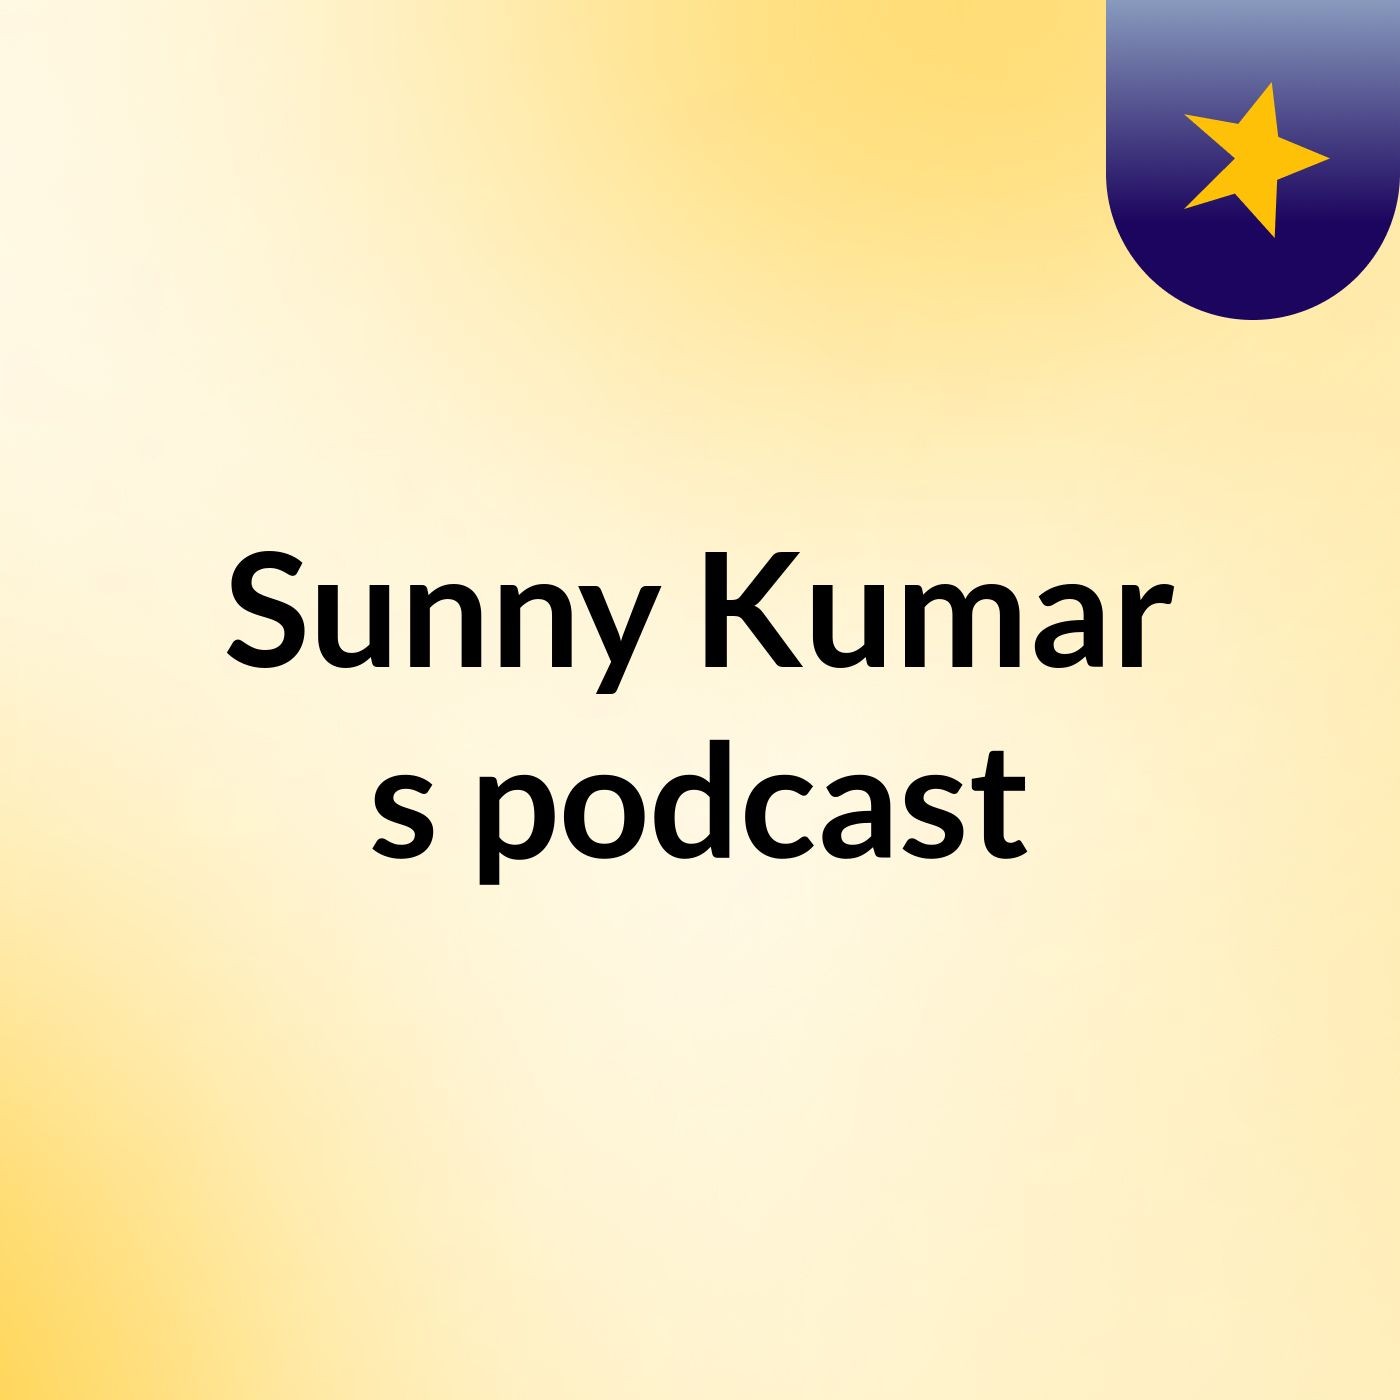 Episode 4 - Sunny Kumar's podcast